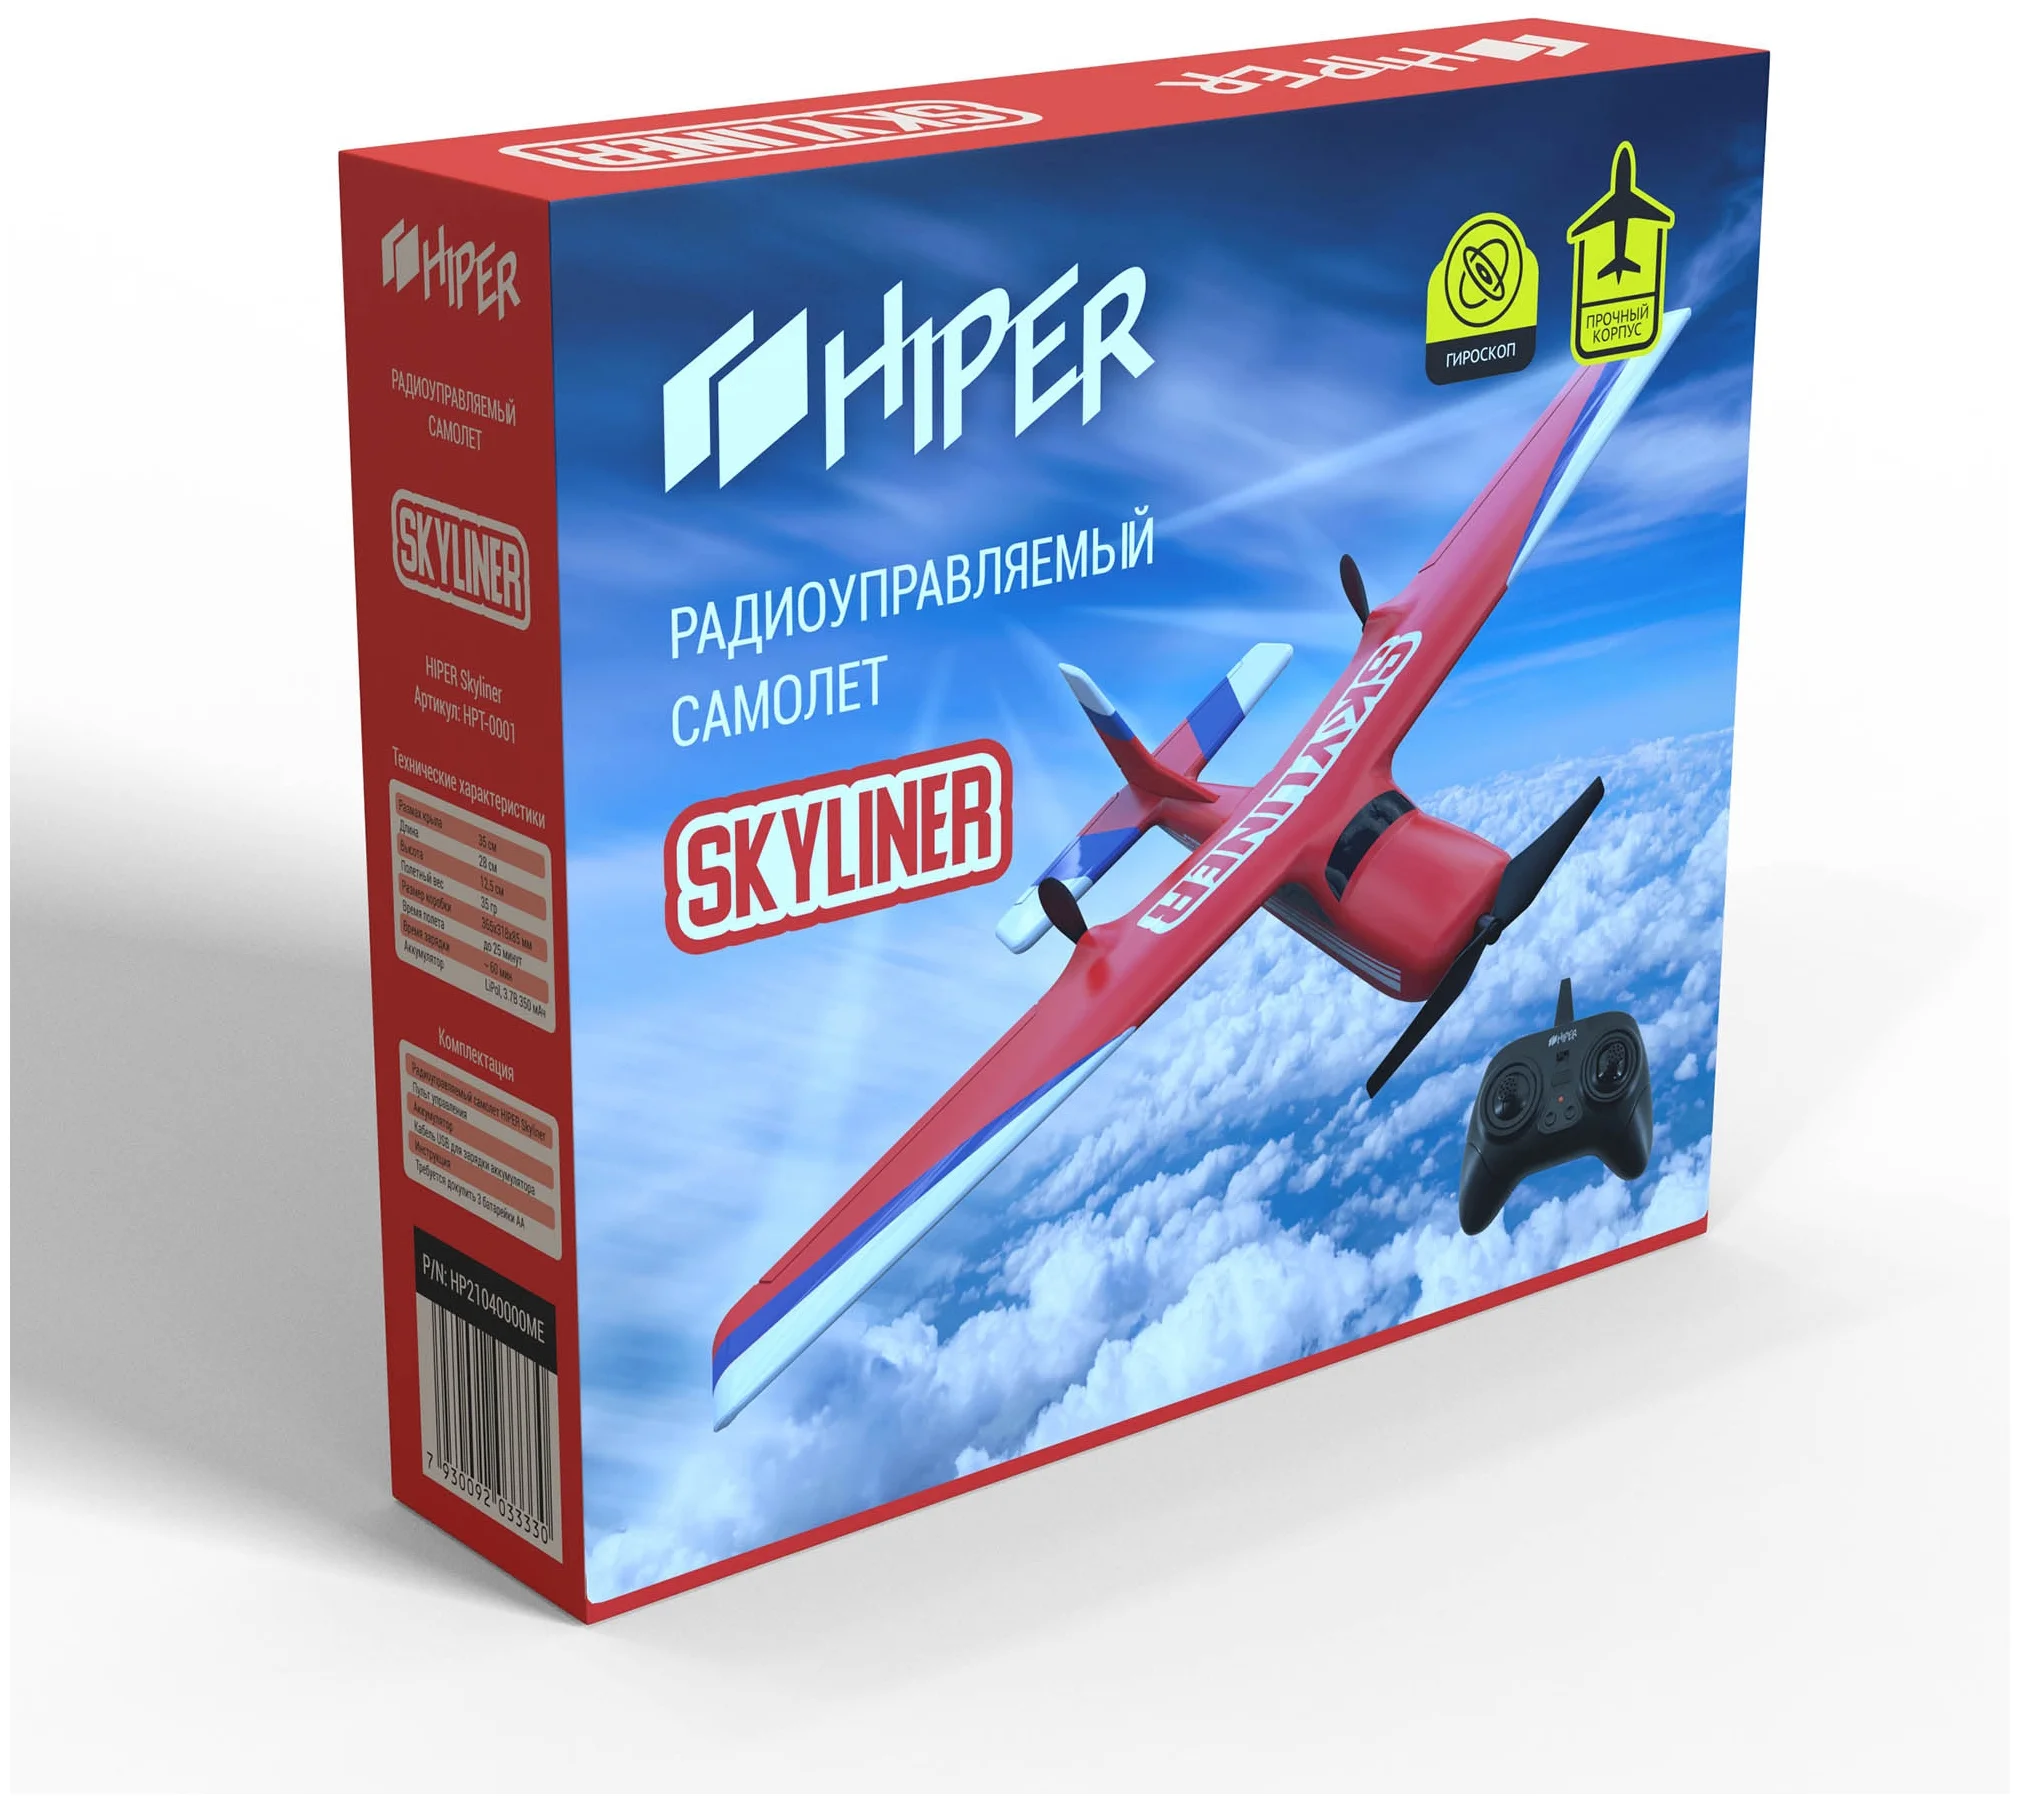 HIPER Skyliner (HPT-0001), 28 см - вес: 0.035 кг